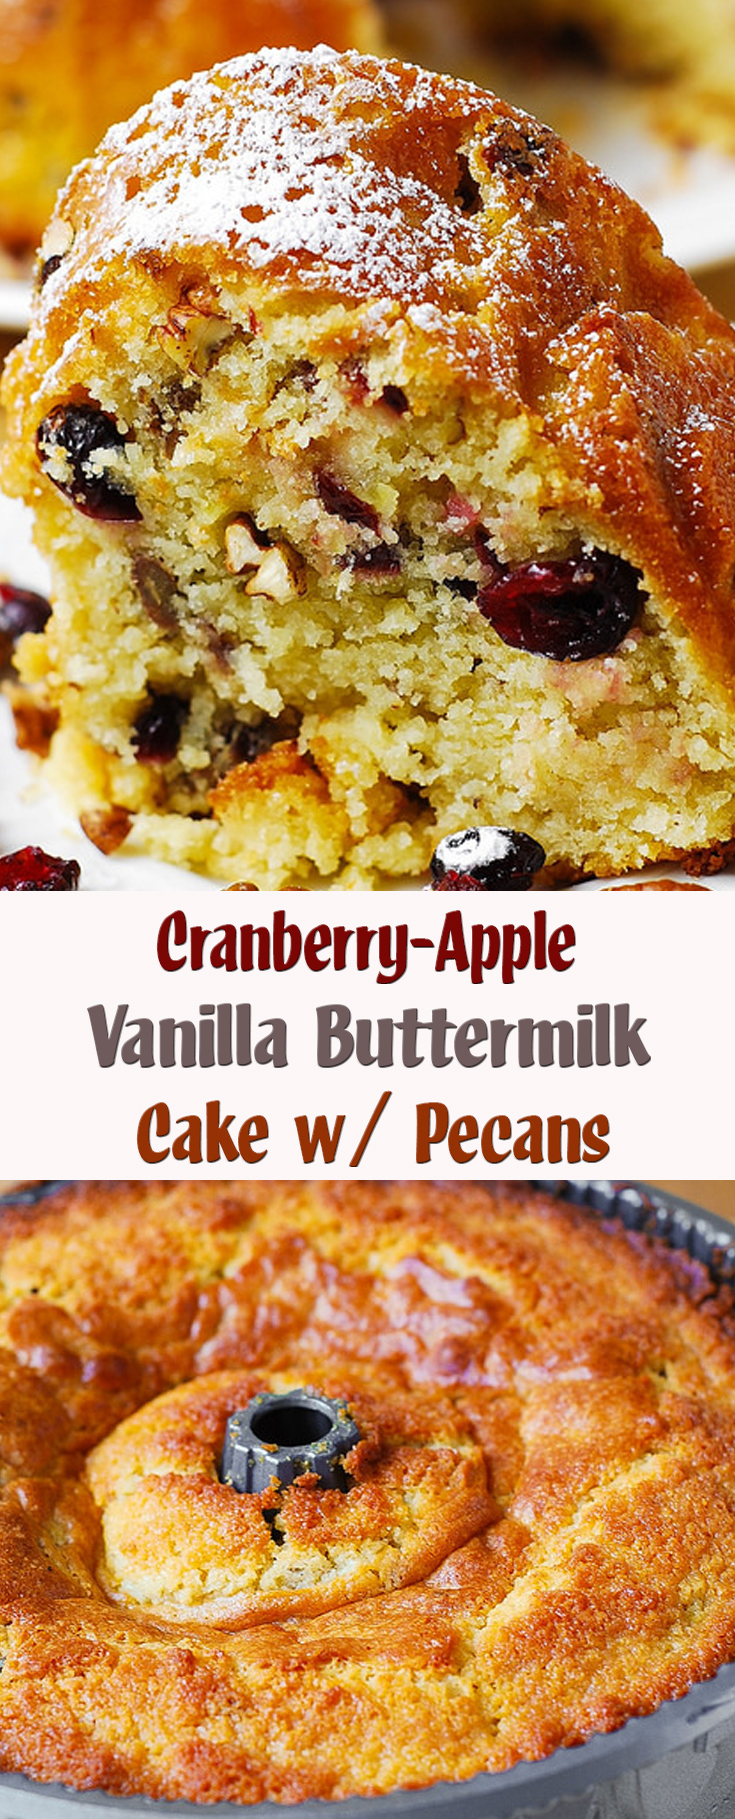 Cranberry-Apple Vanilla Buttermilk Cake with Pecans